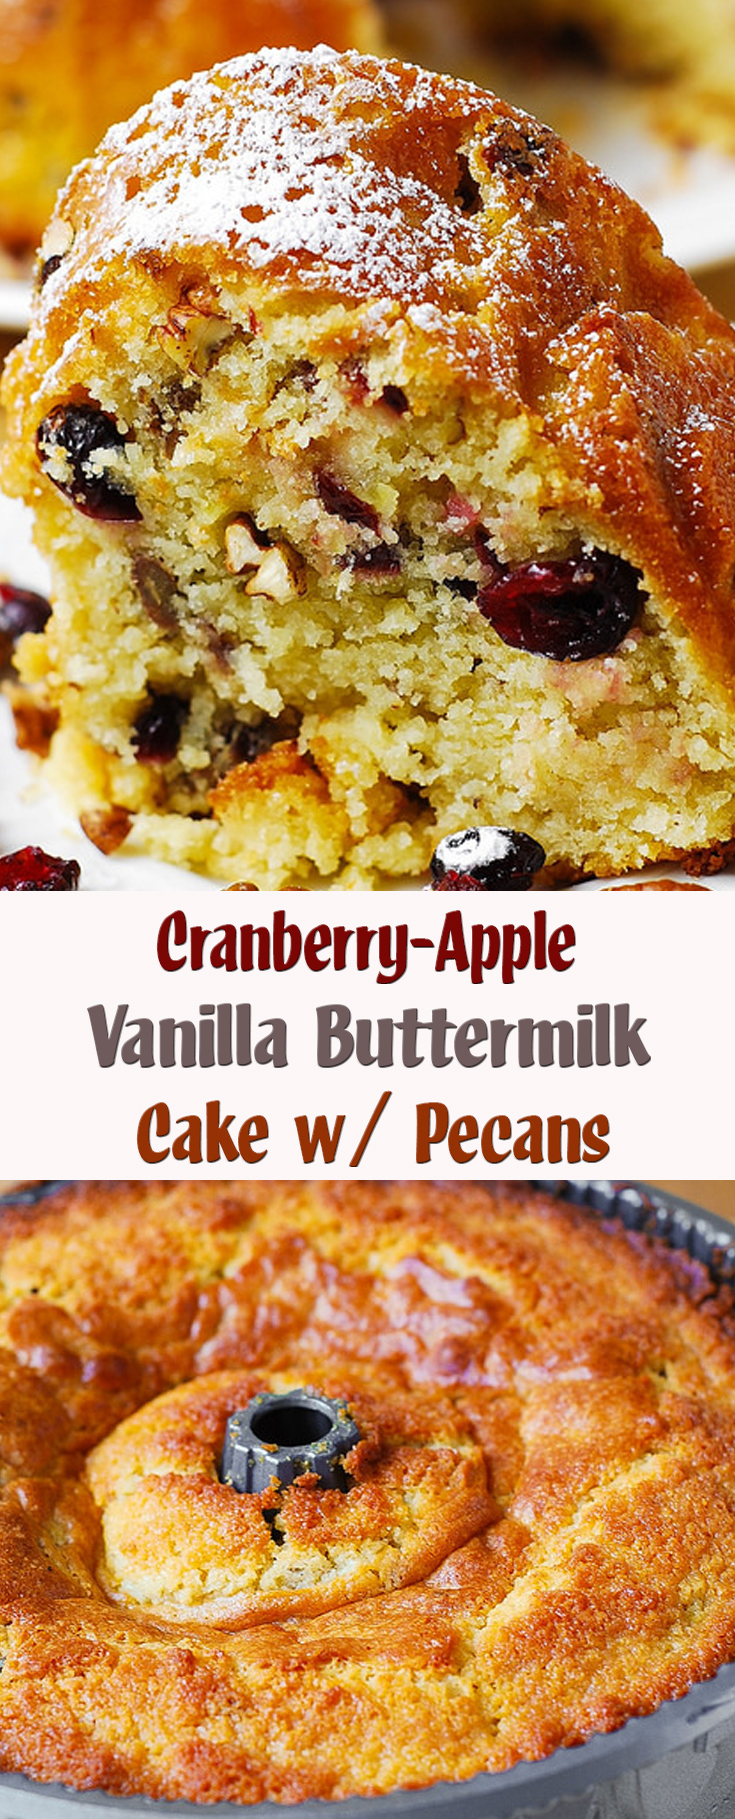 Cranberry-Apple Vanilla Buttermilk Cake with Pecans